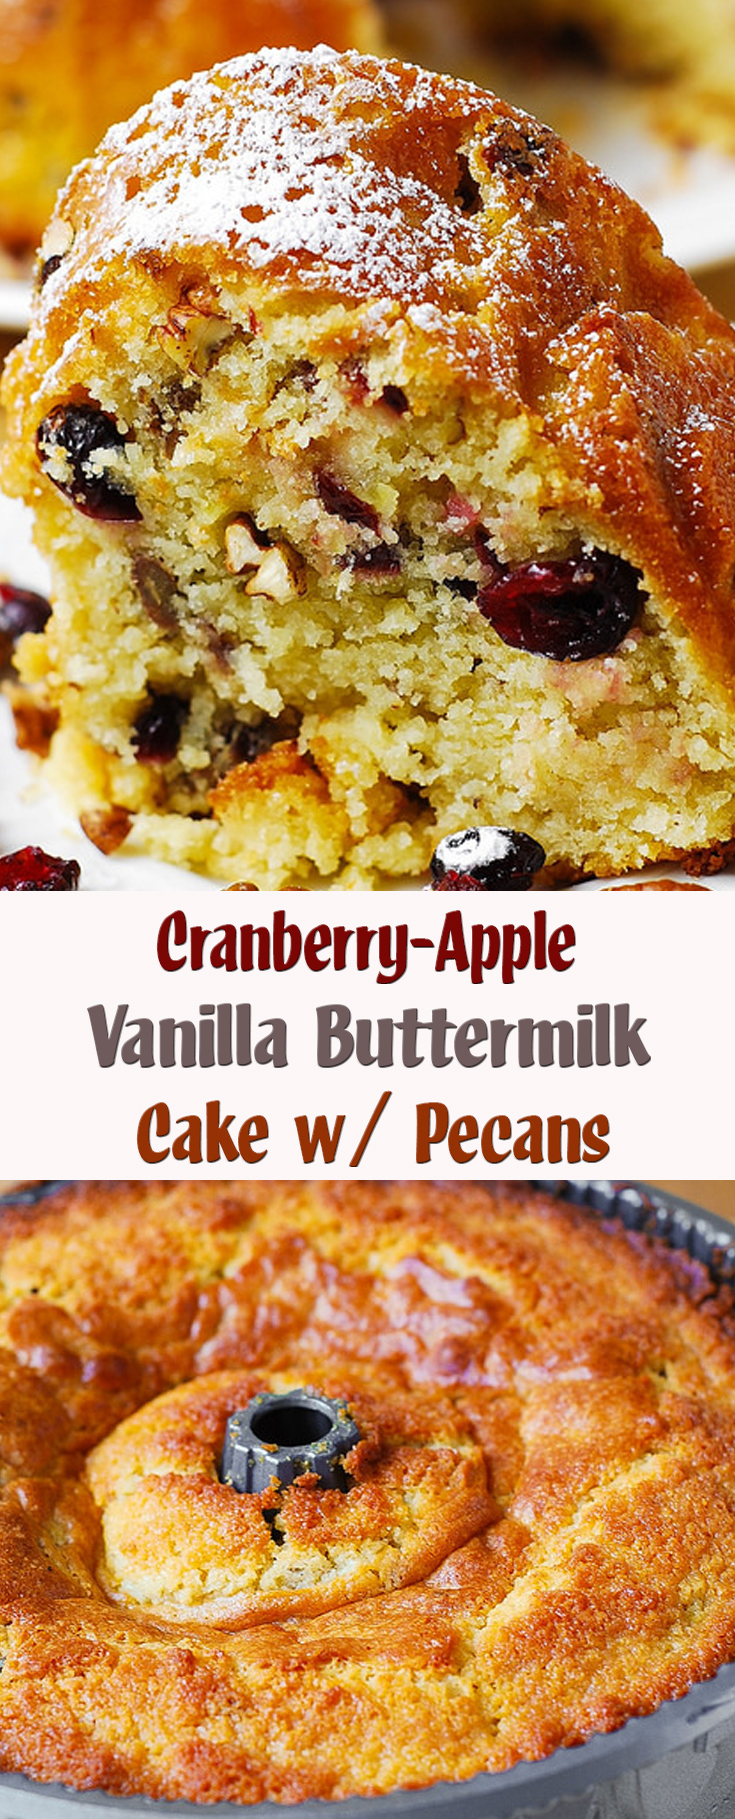 Cranberry-Apple Vanilla Buttermilk Cake with Pecans